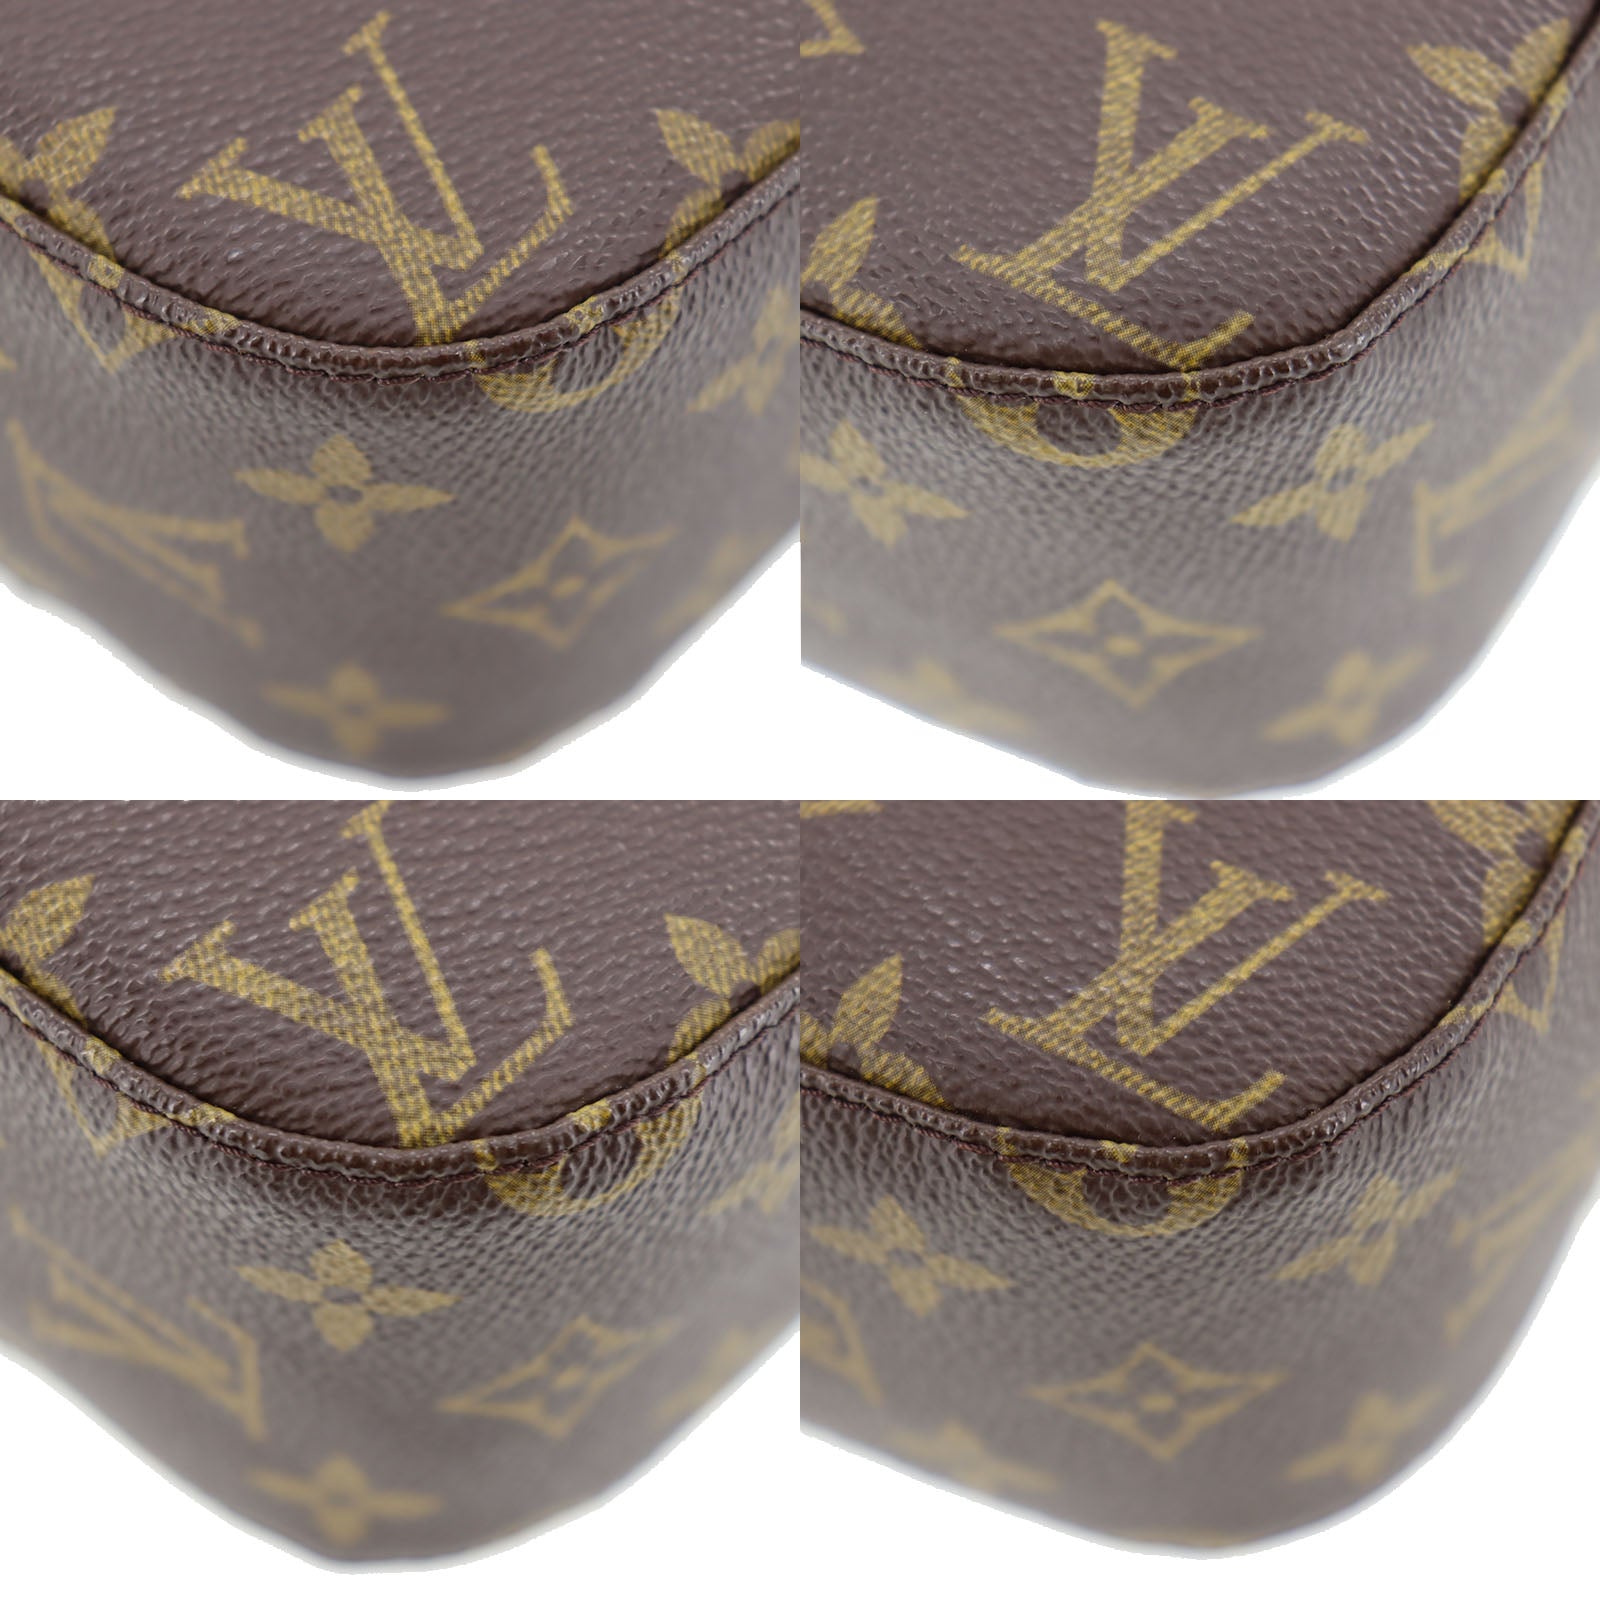 LOUIS VUITTON Monogram Spontini shoulder bag M47500 branded